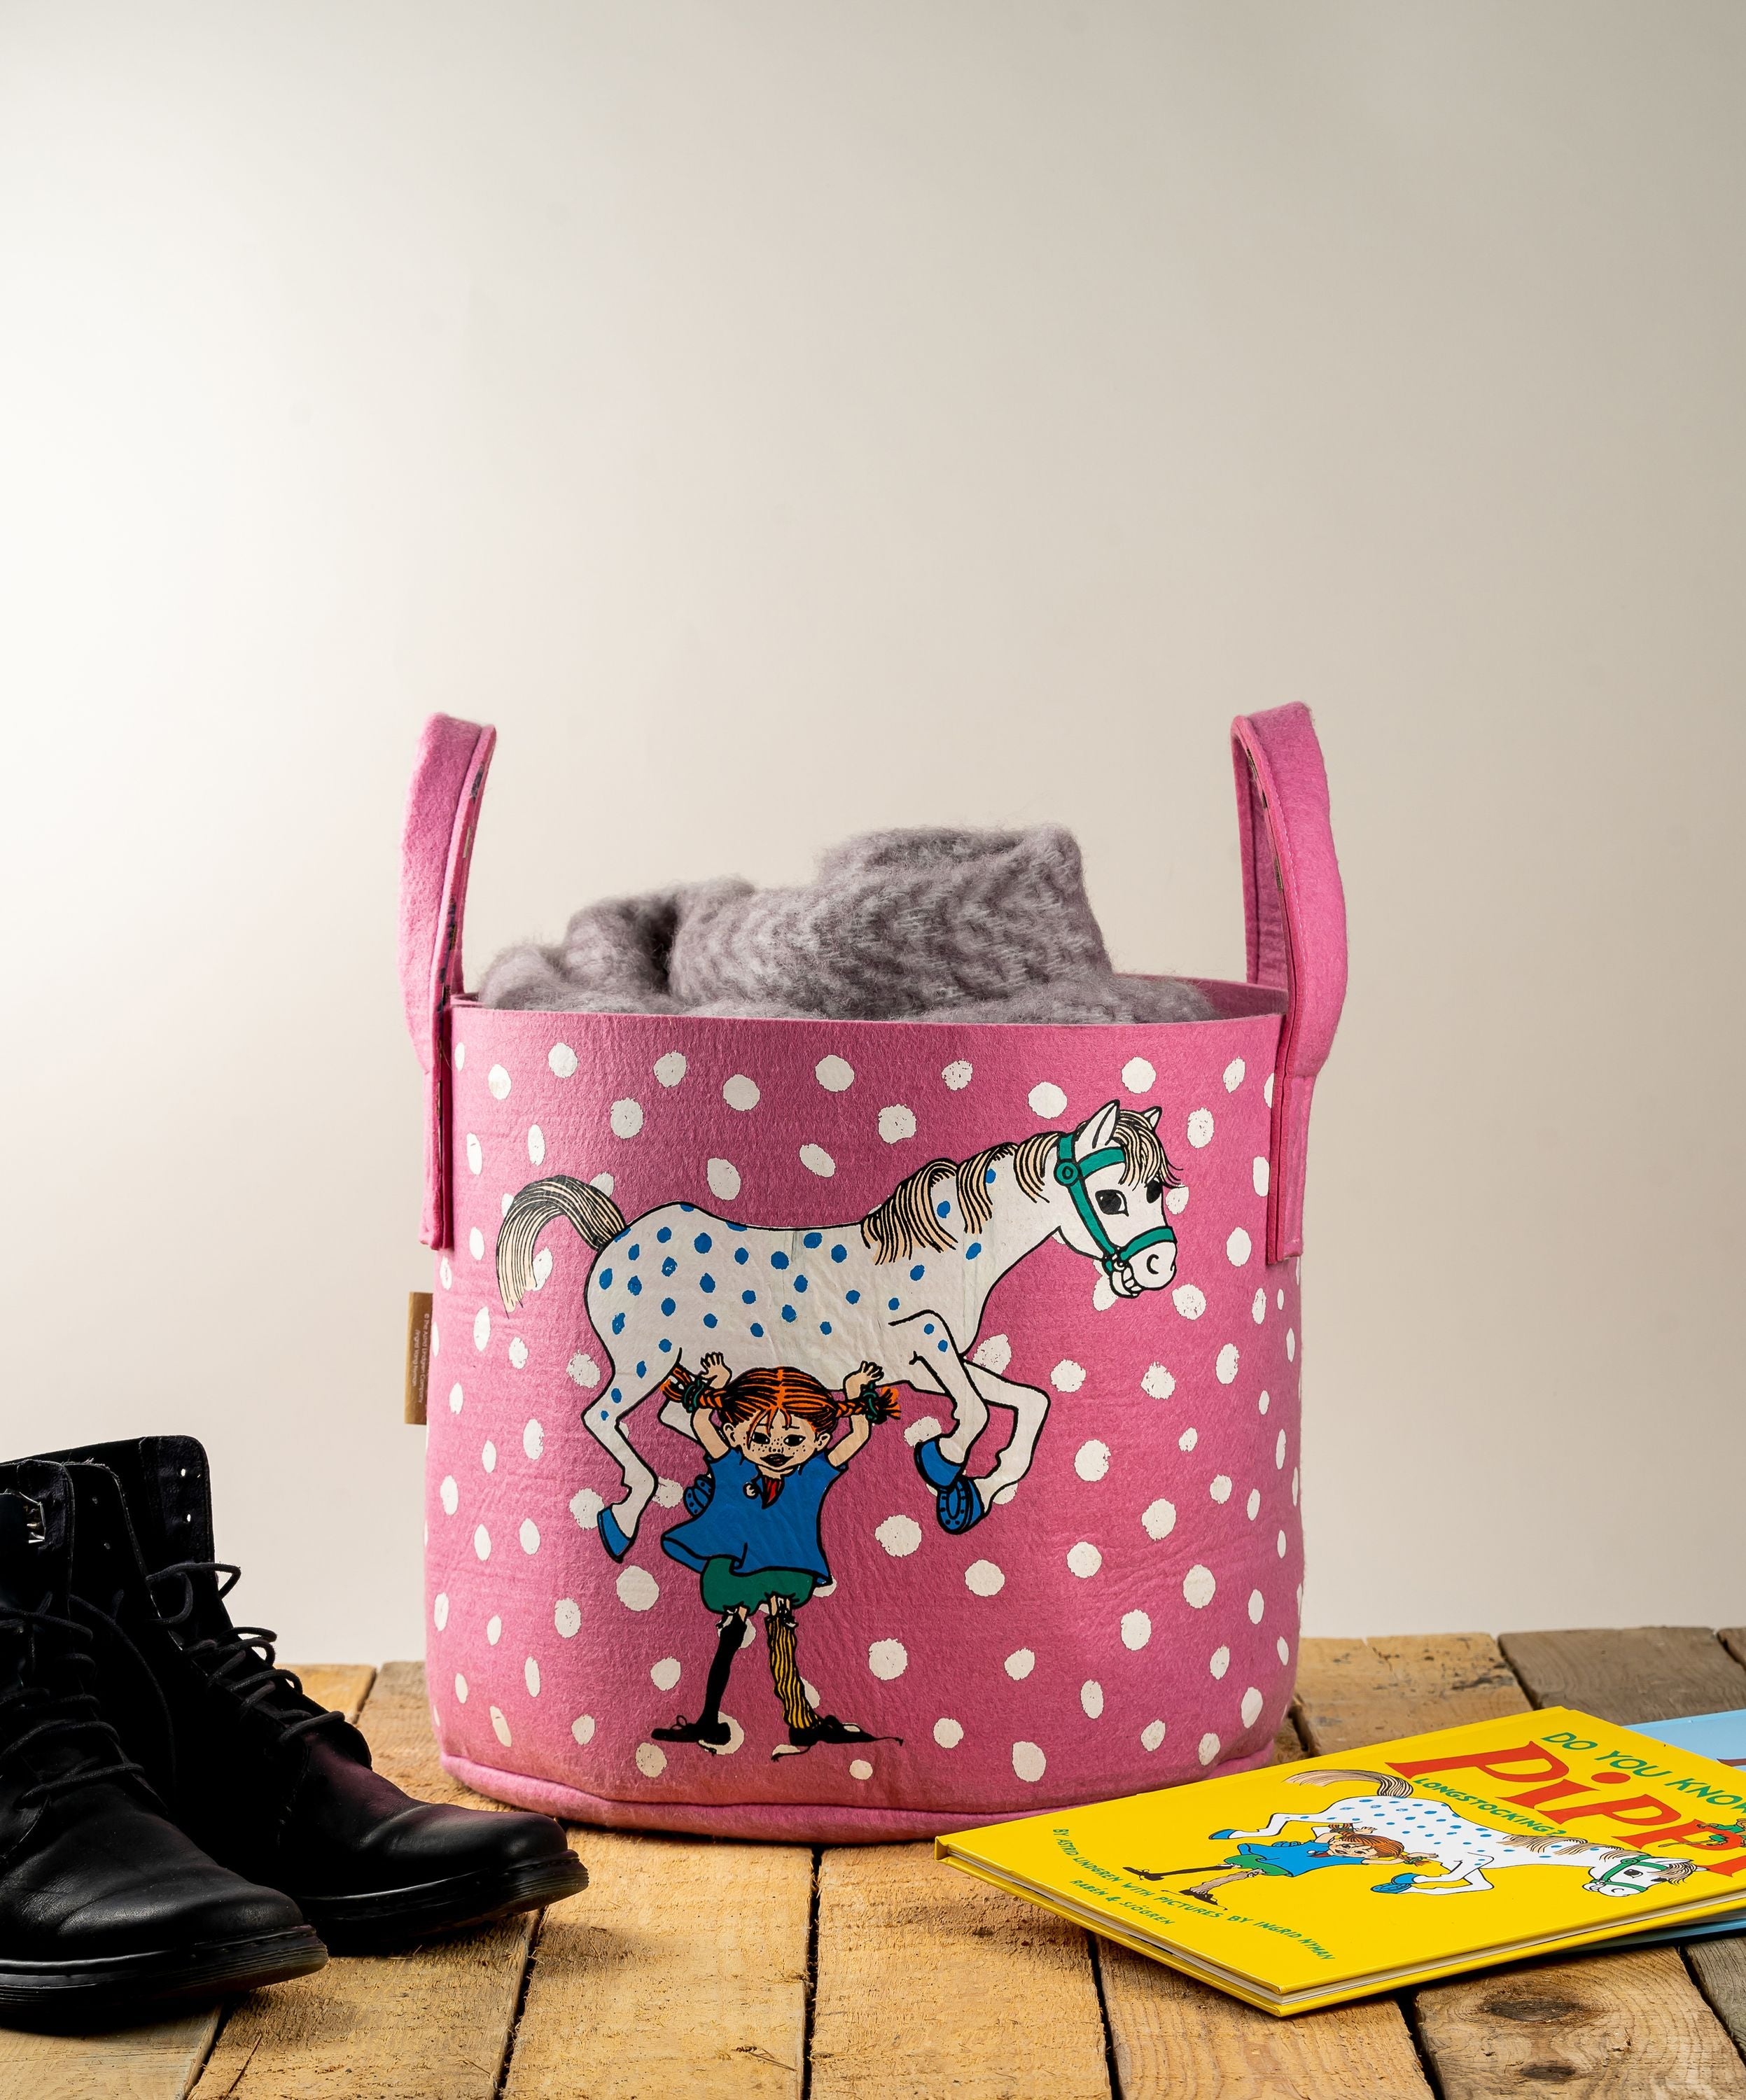 Muurla Pippi Longstocking Storage Basket, Pippi und The Horse, Pink